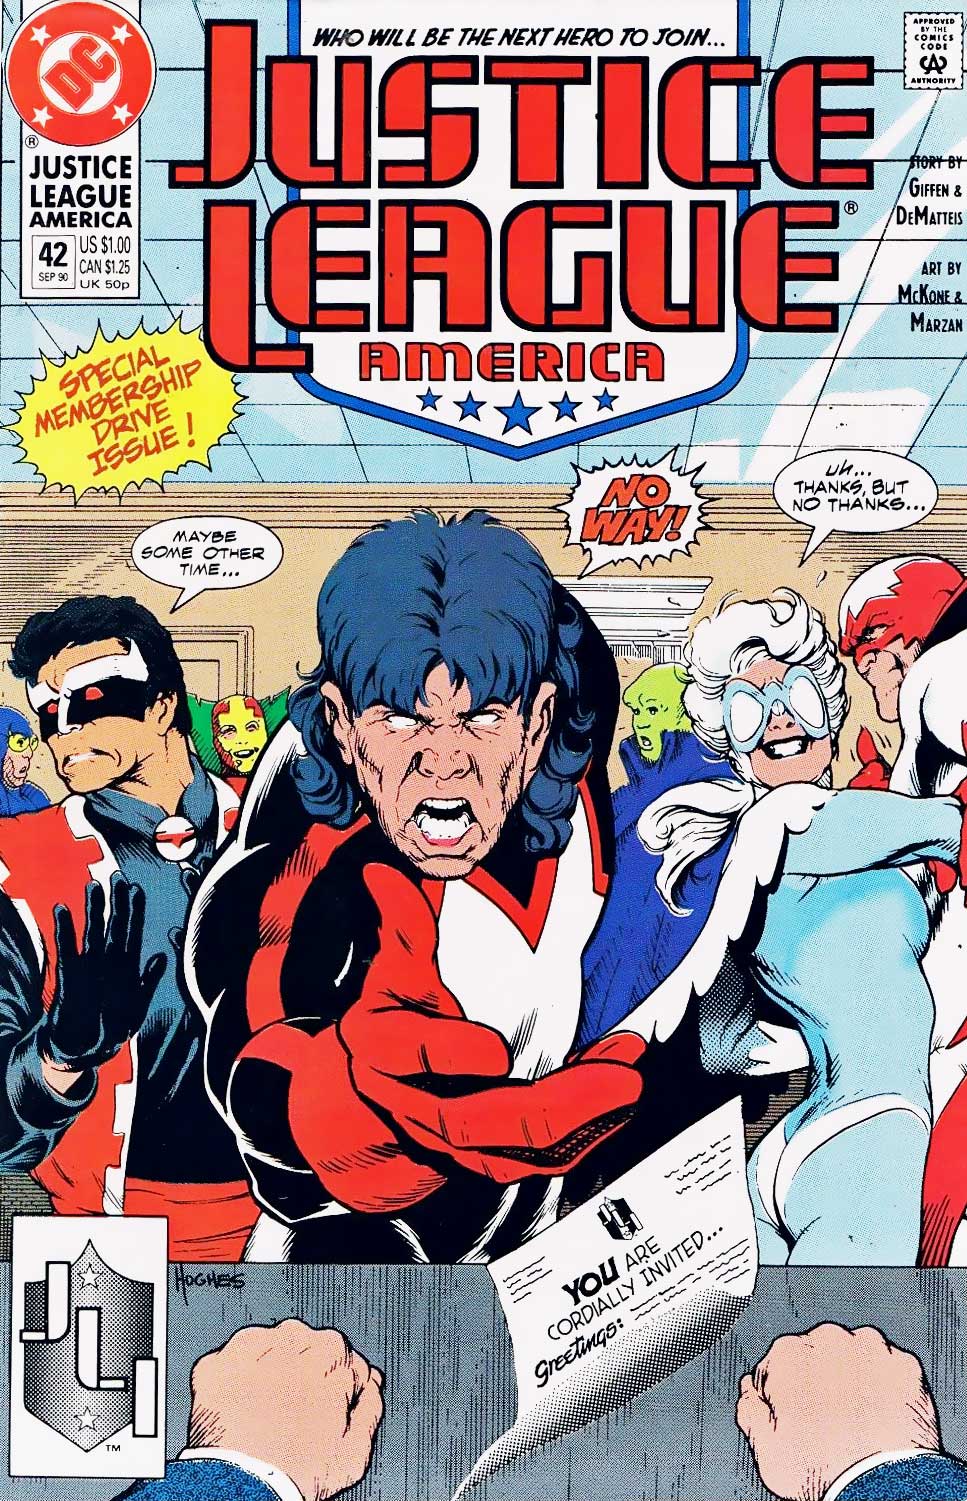 Justice League America #42 cover by Adam Hughes